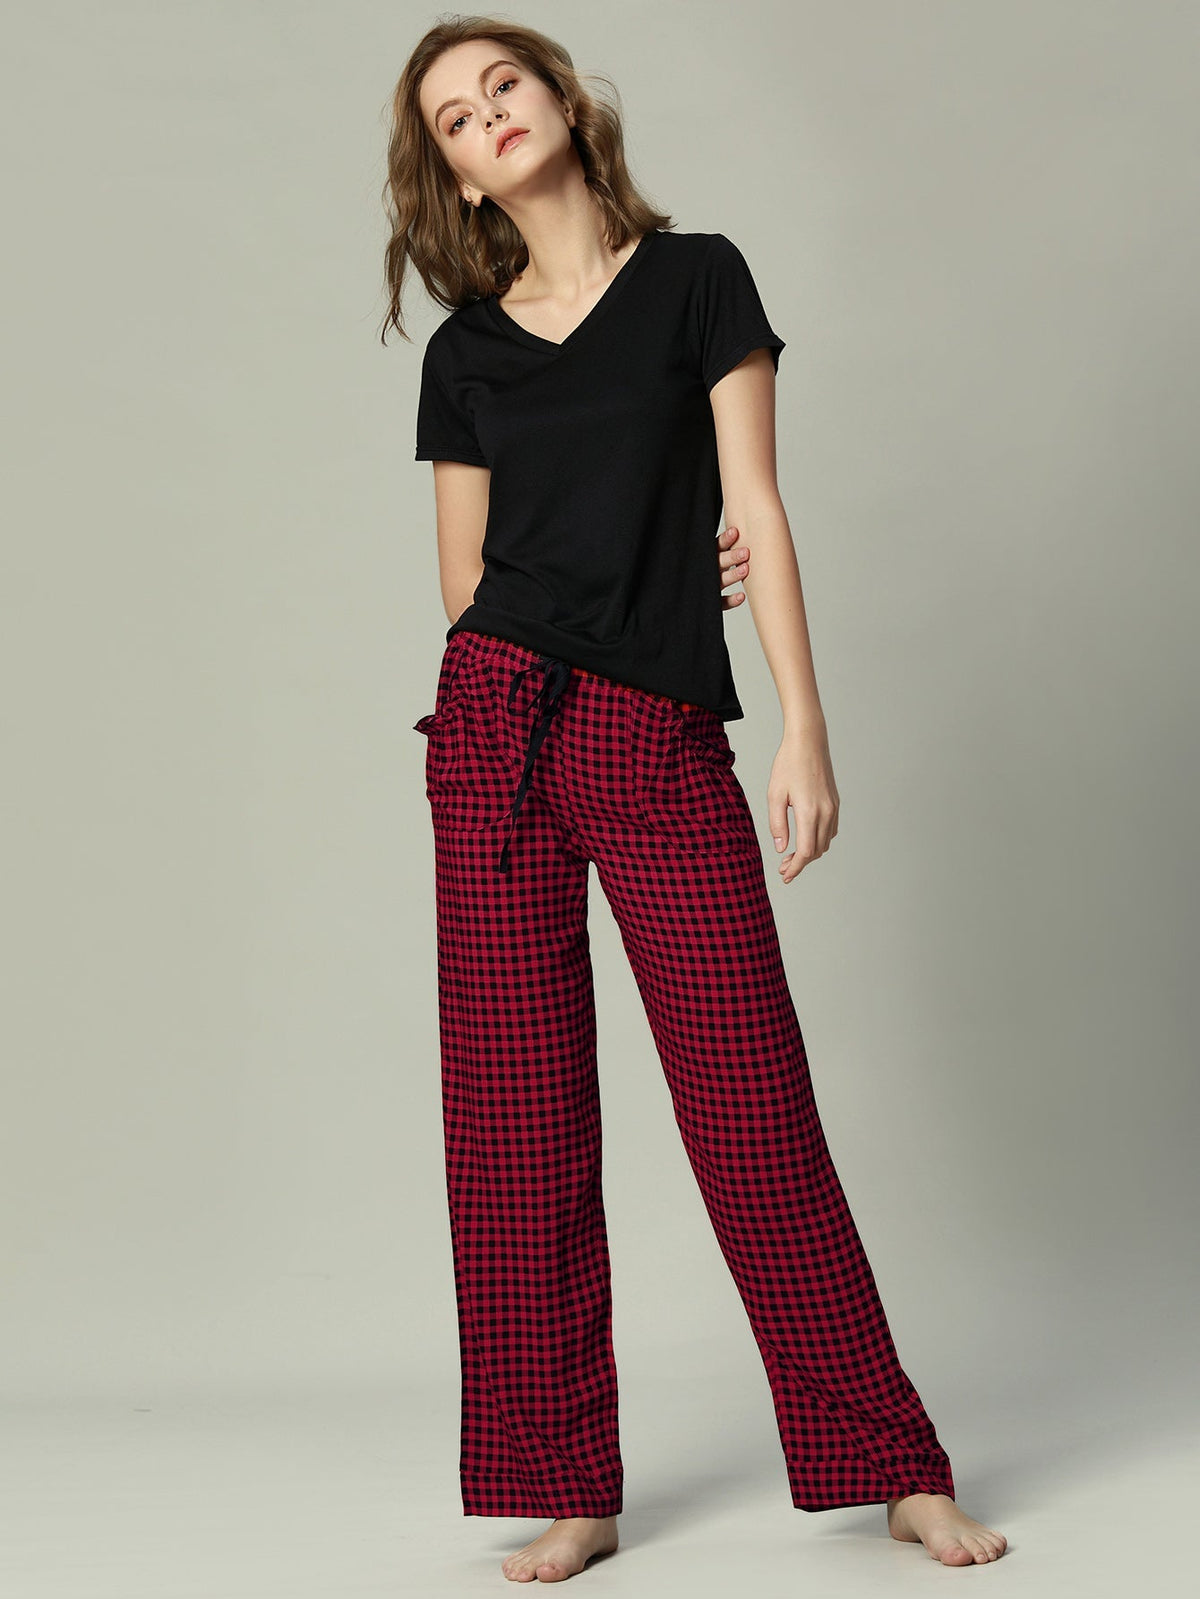 Womens' Pajama Set - Short Sleeve Shirt and Plaid Pajama Pants Pj Set;Home Nightwear Sleepsuit XS-XXL Loungewear set Sai Feel